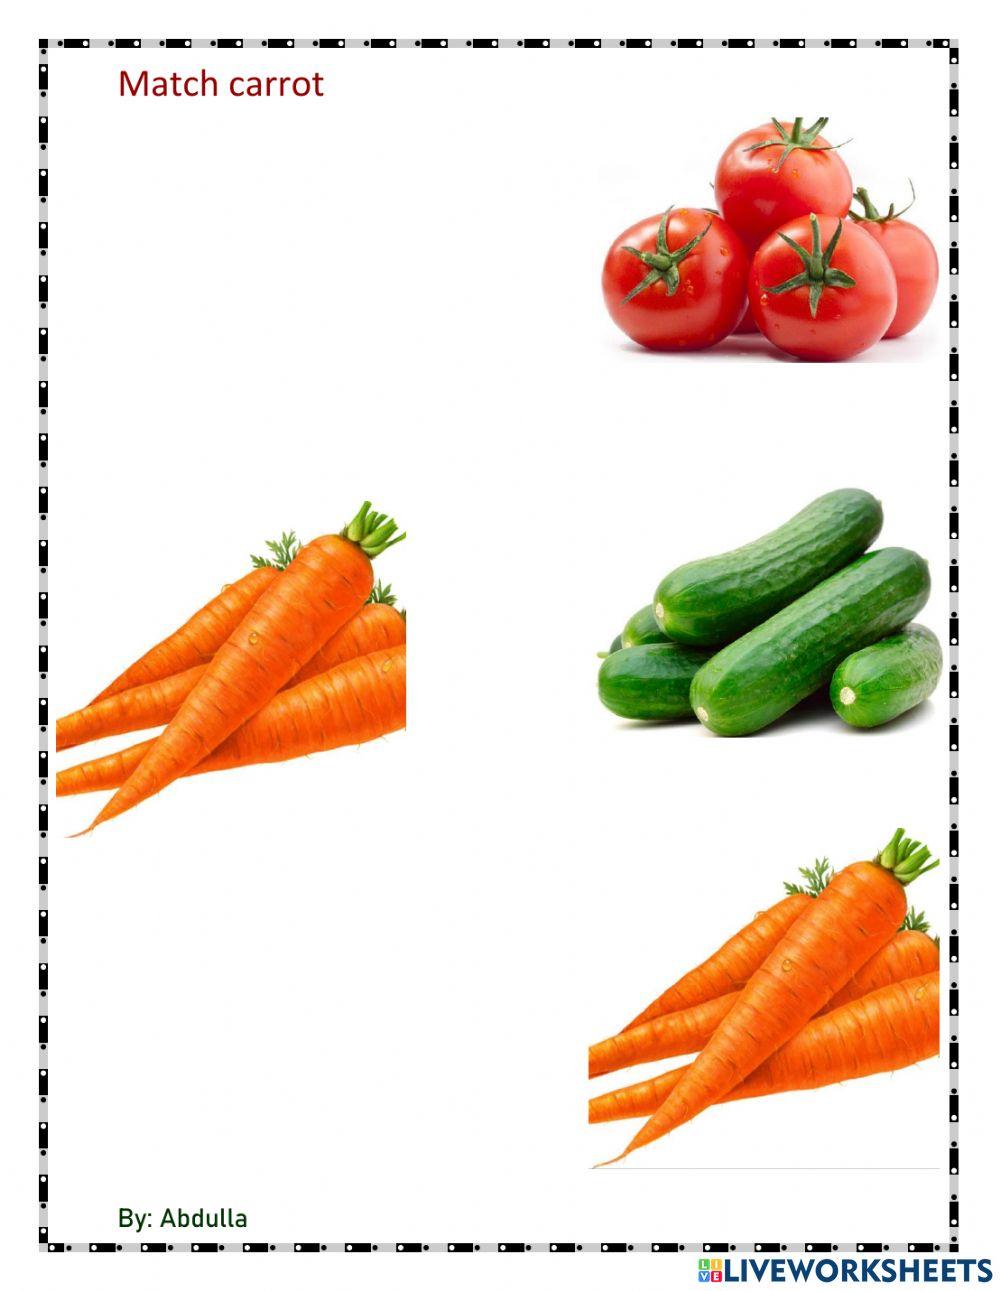 Match the carrot